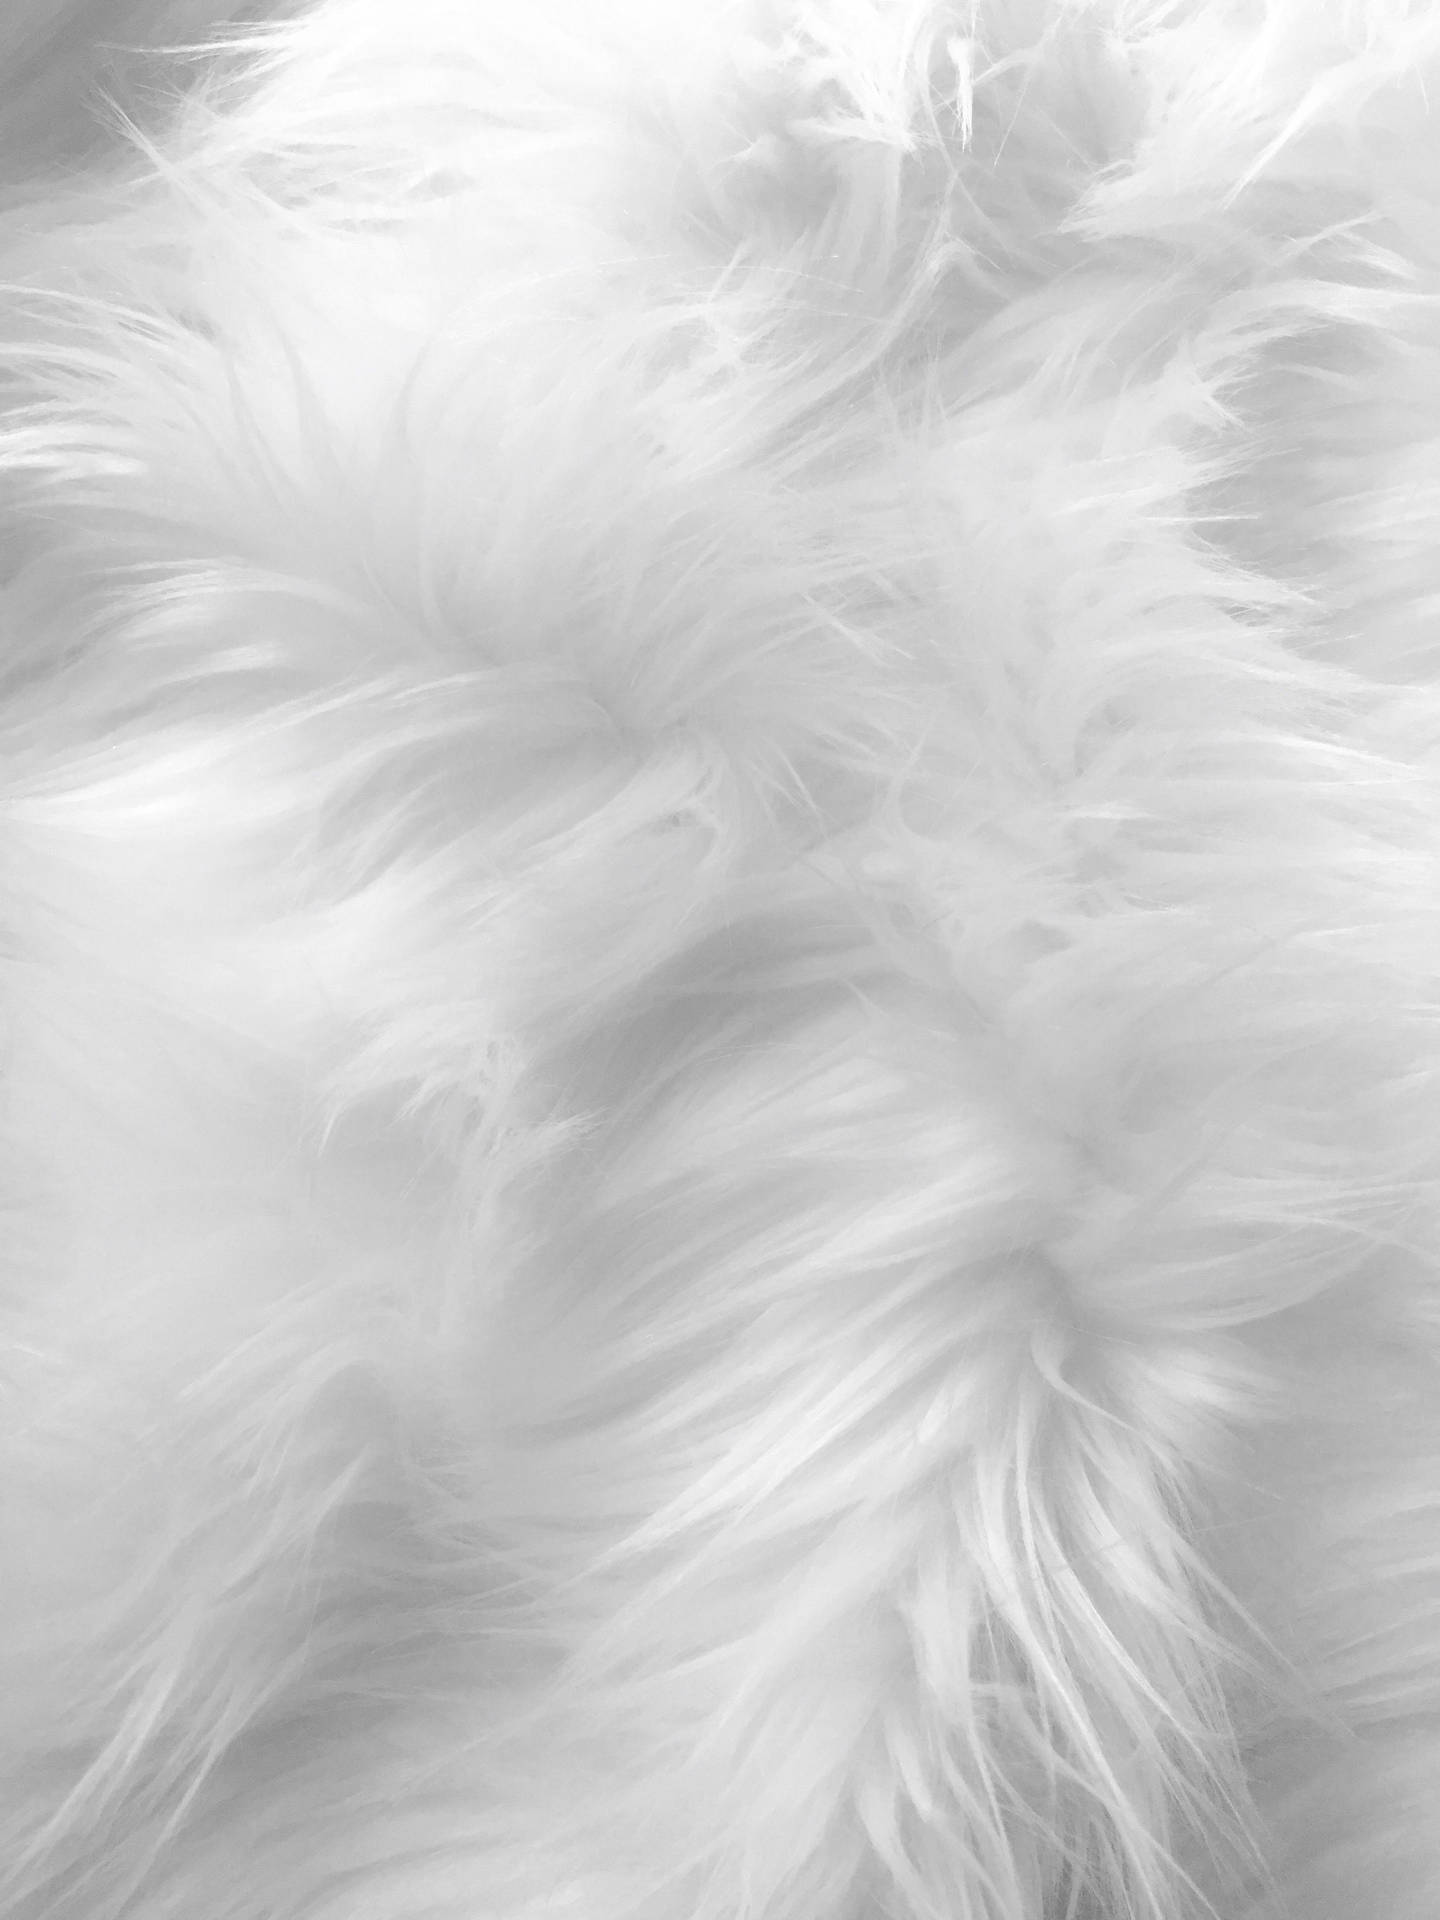 Soft White Animal Fur Background